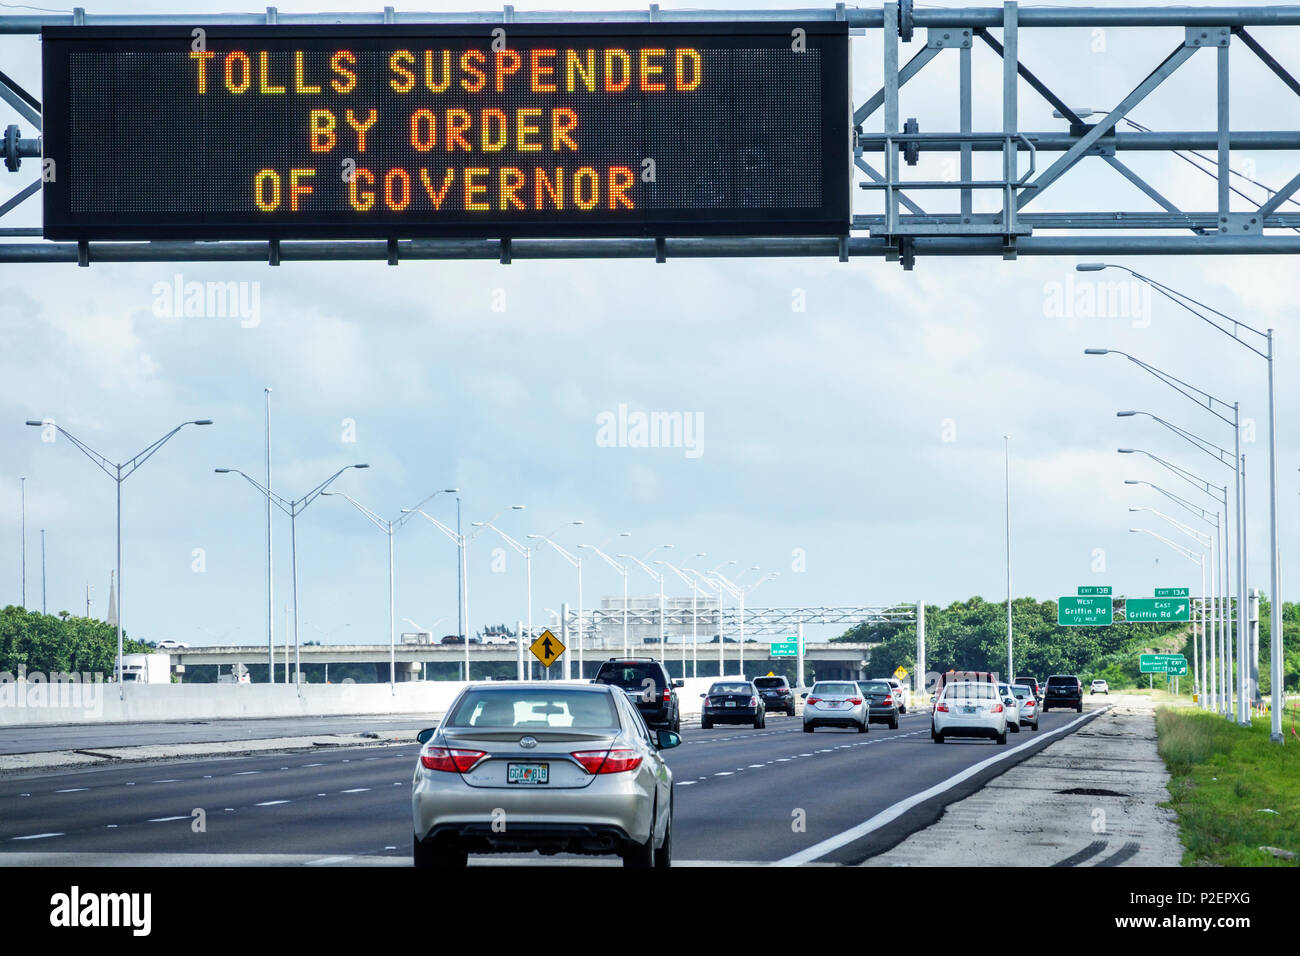 Miami Florida,Hurricane Irma approaching preparation,Interstate I-75 I75,electronic sign,evacuation tolls suspended order governor,highway traffic,eva Stock Photo